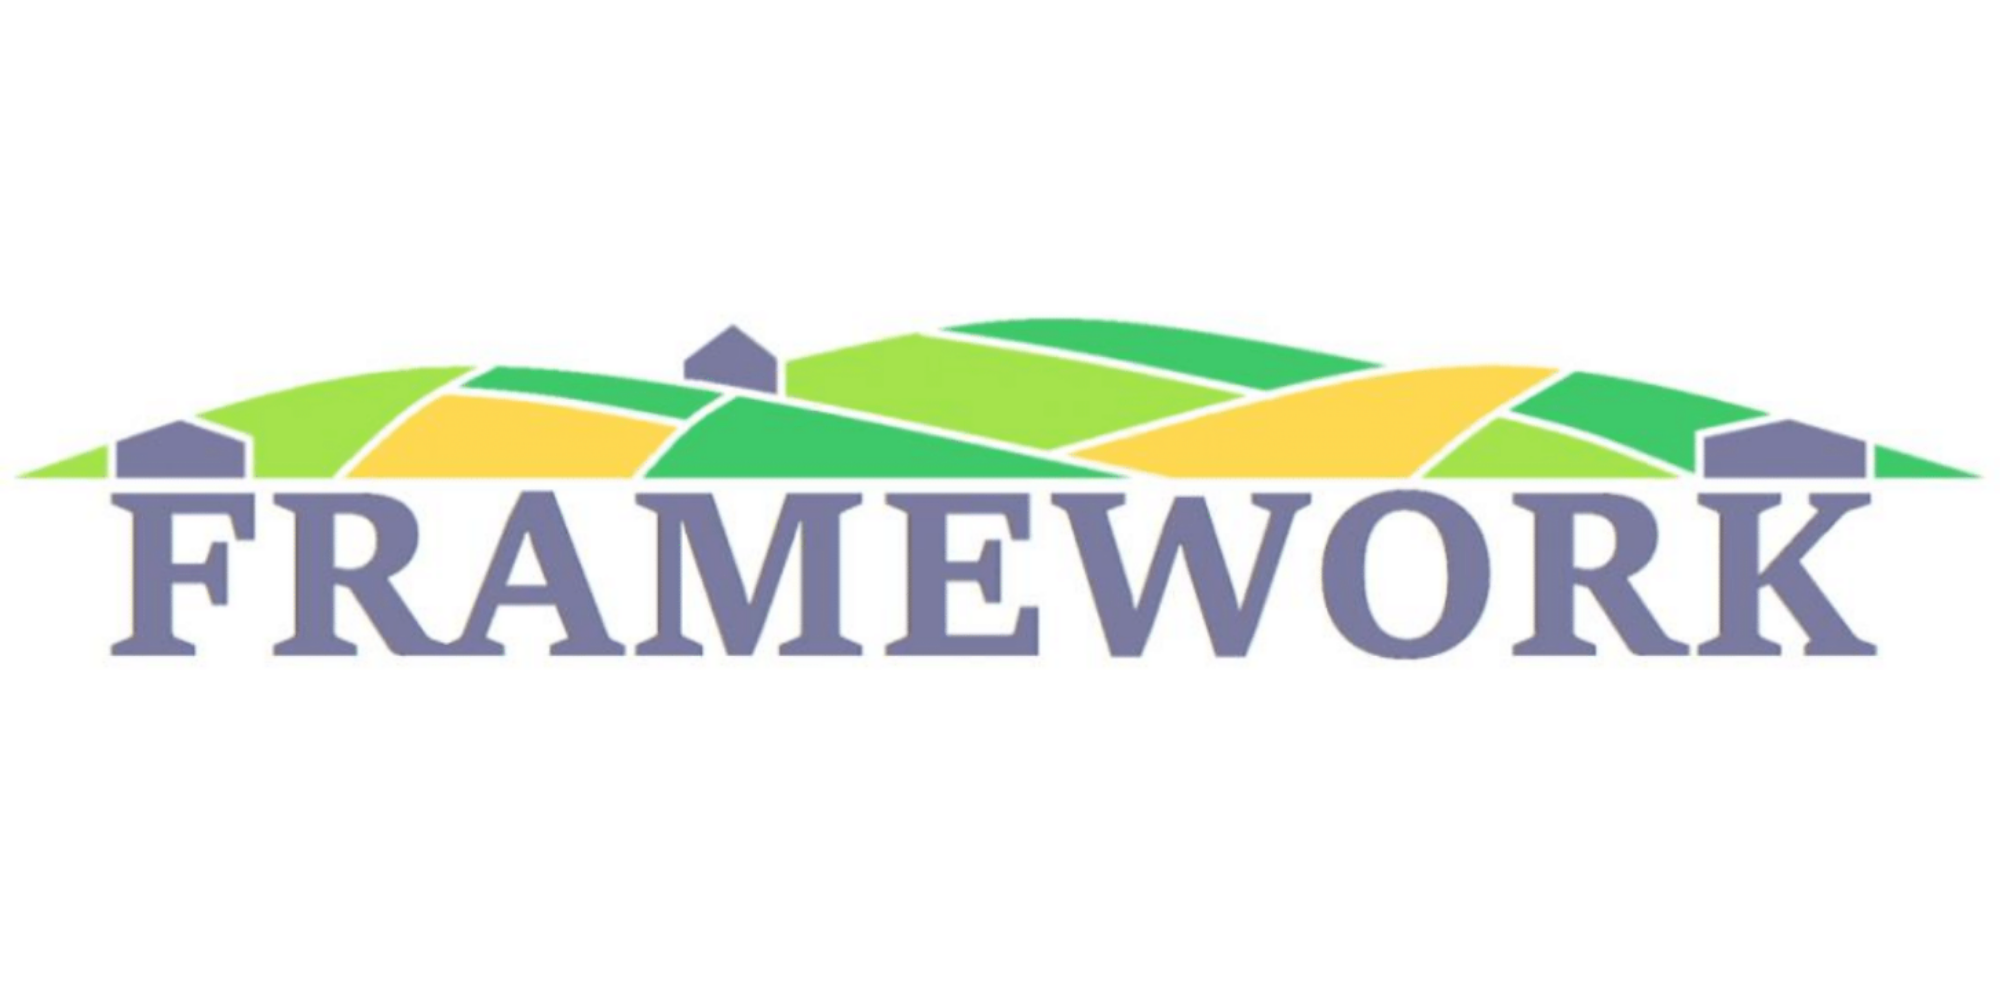 Lancement du projet FRAMEWORK